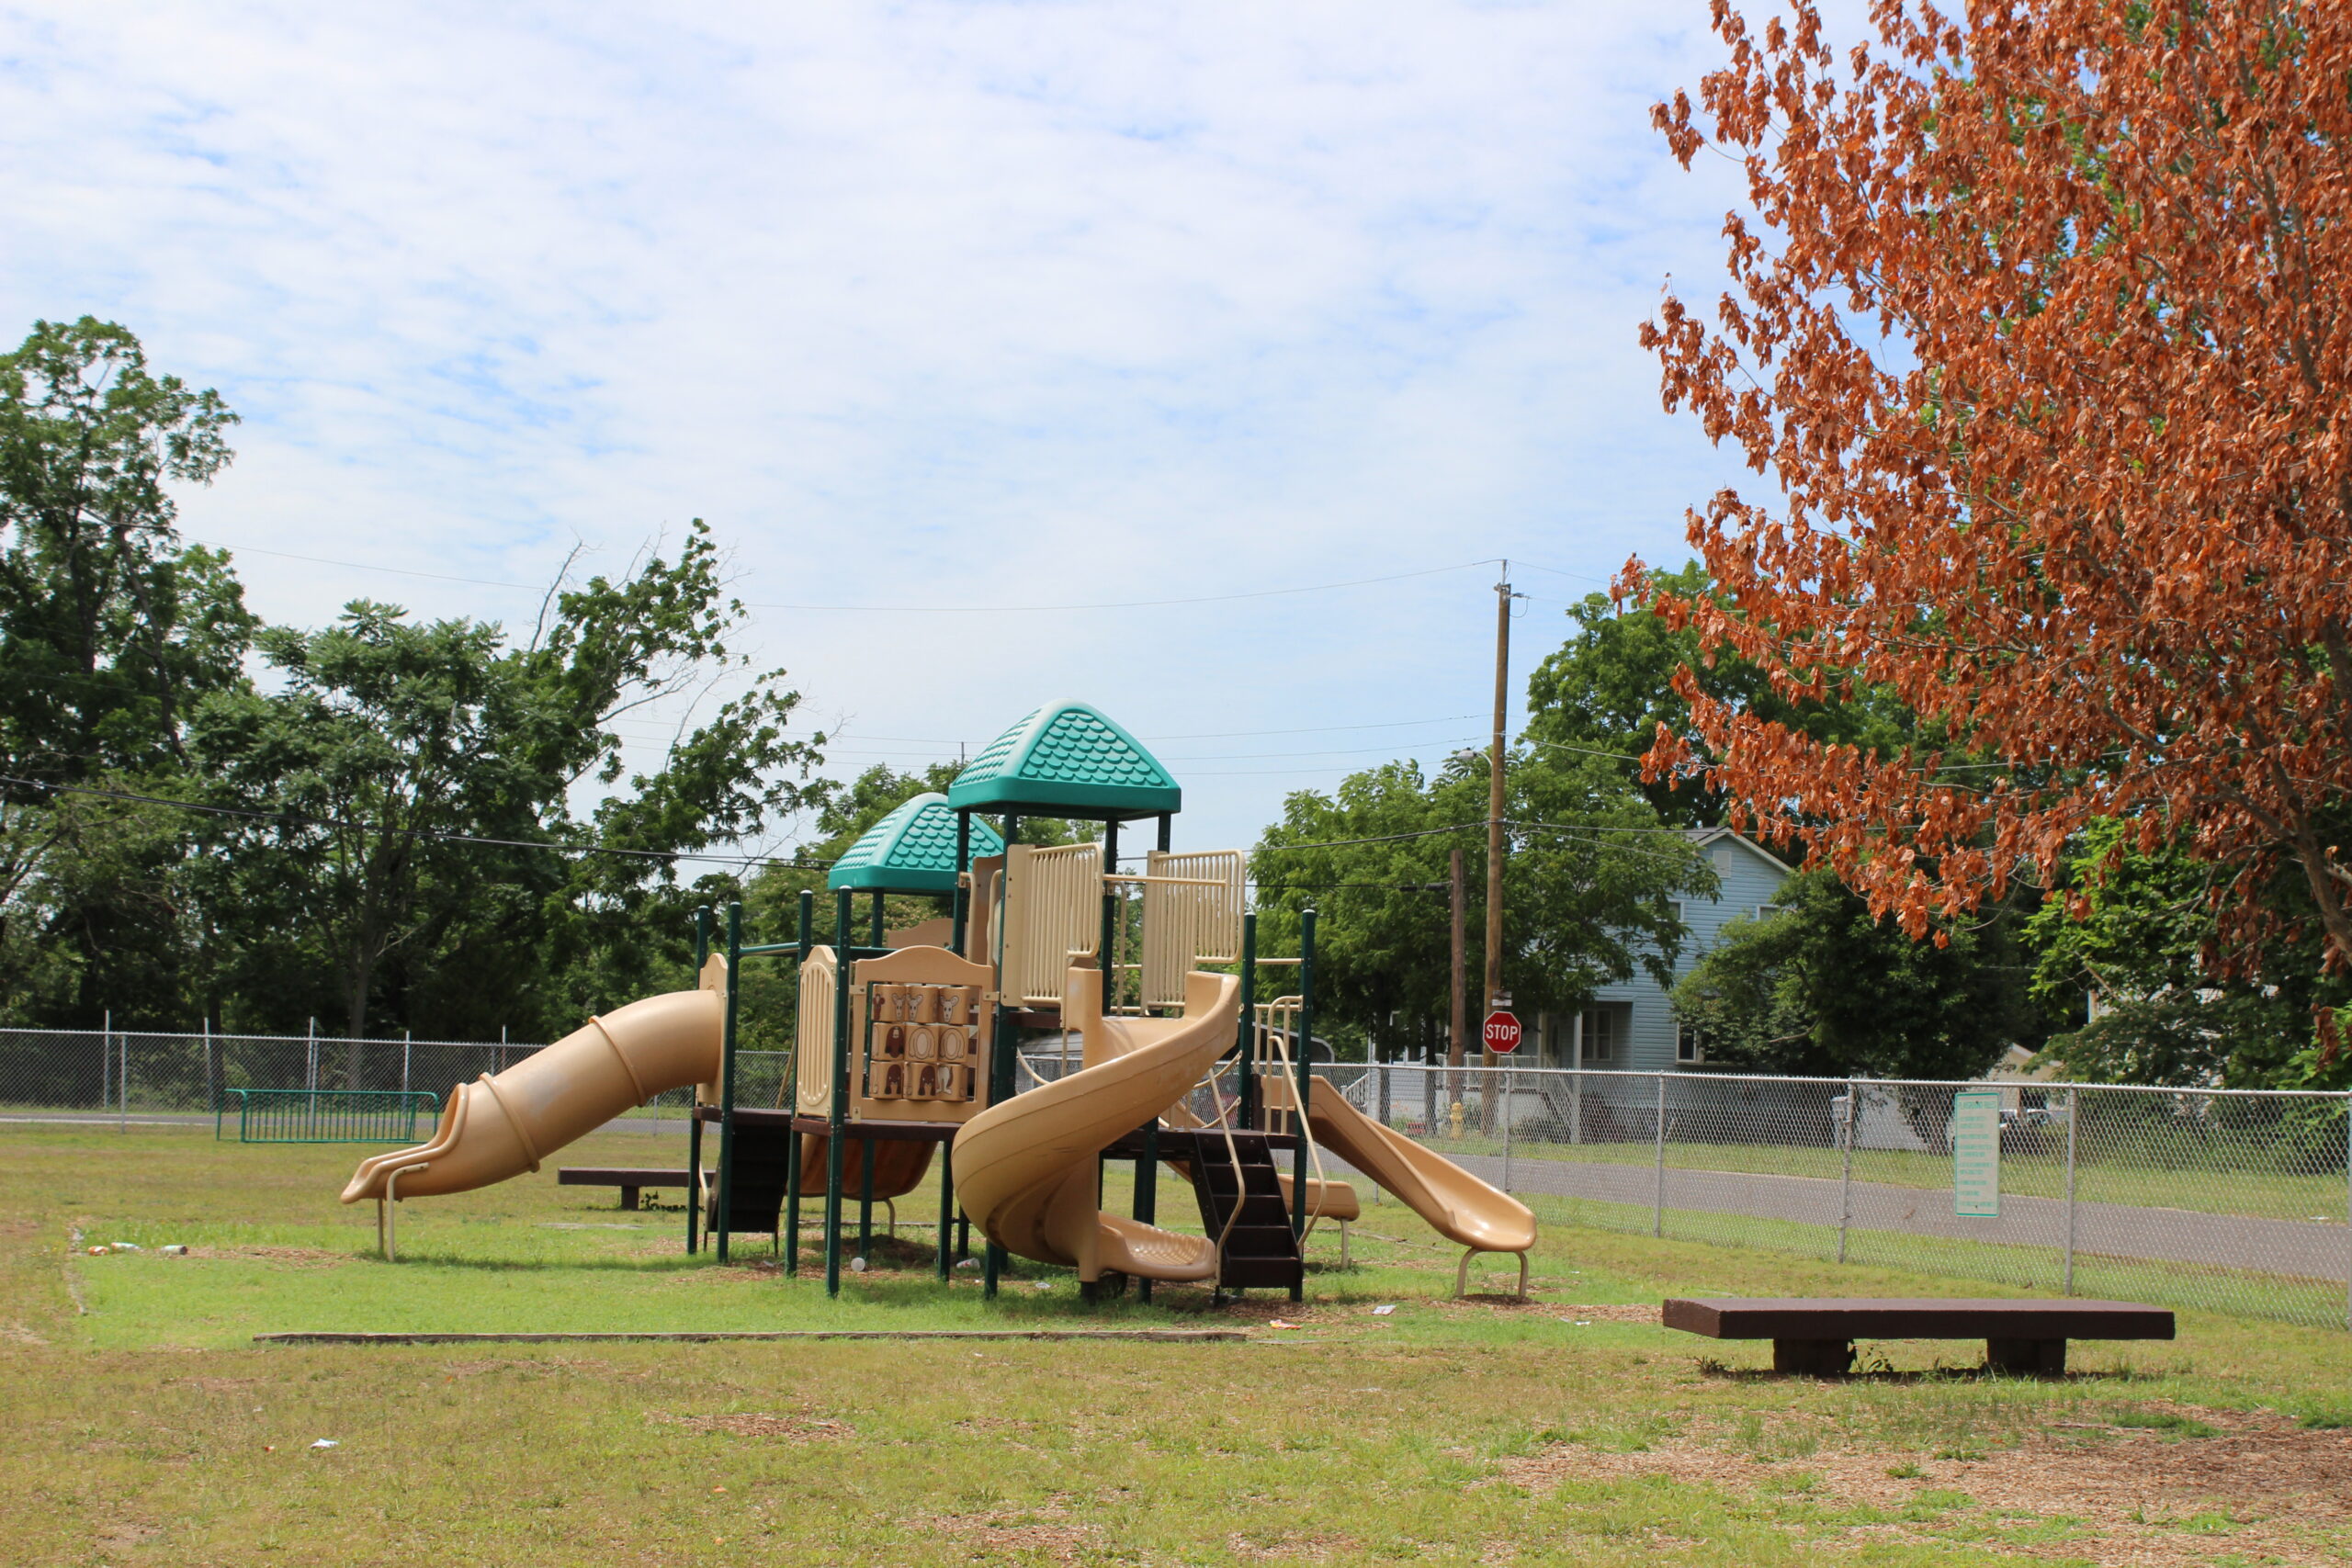 Friendship Park Playground in Millville NJ - WIDE image - playground twisting slide side